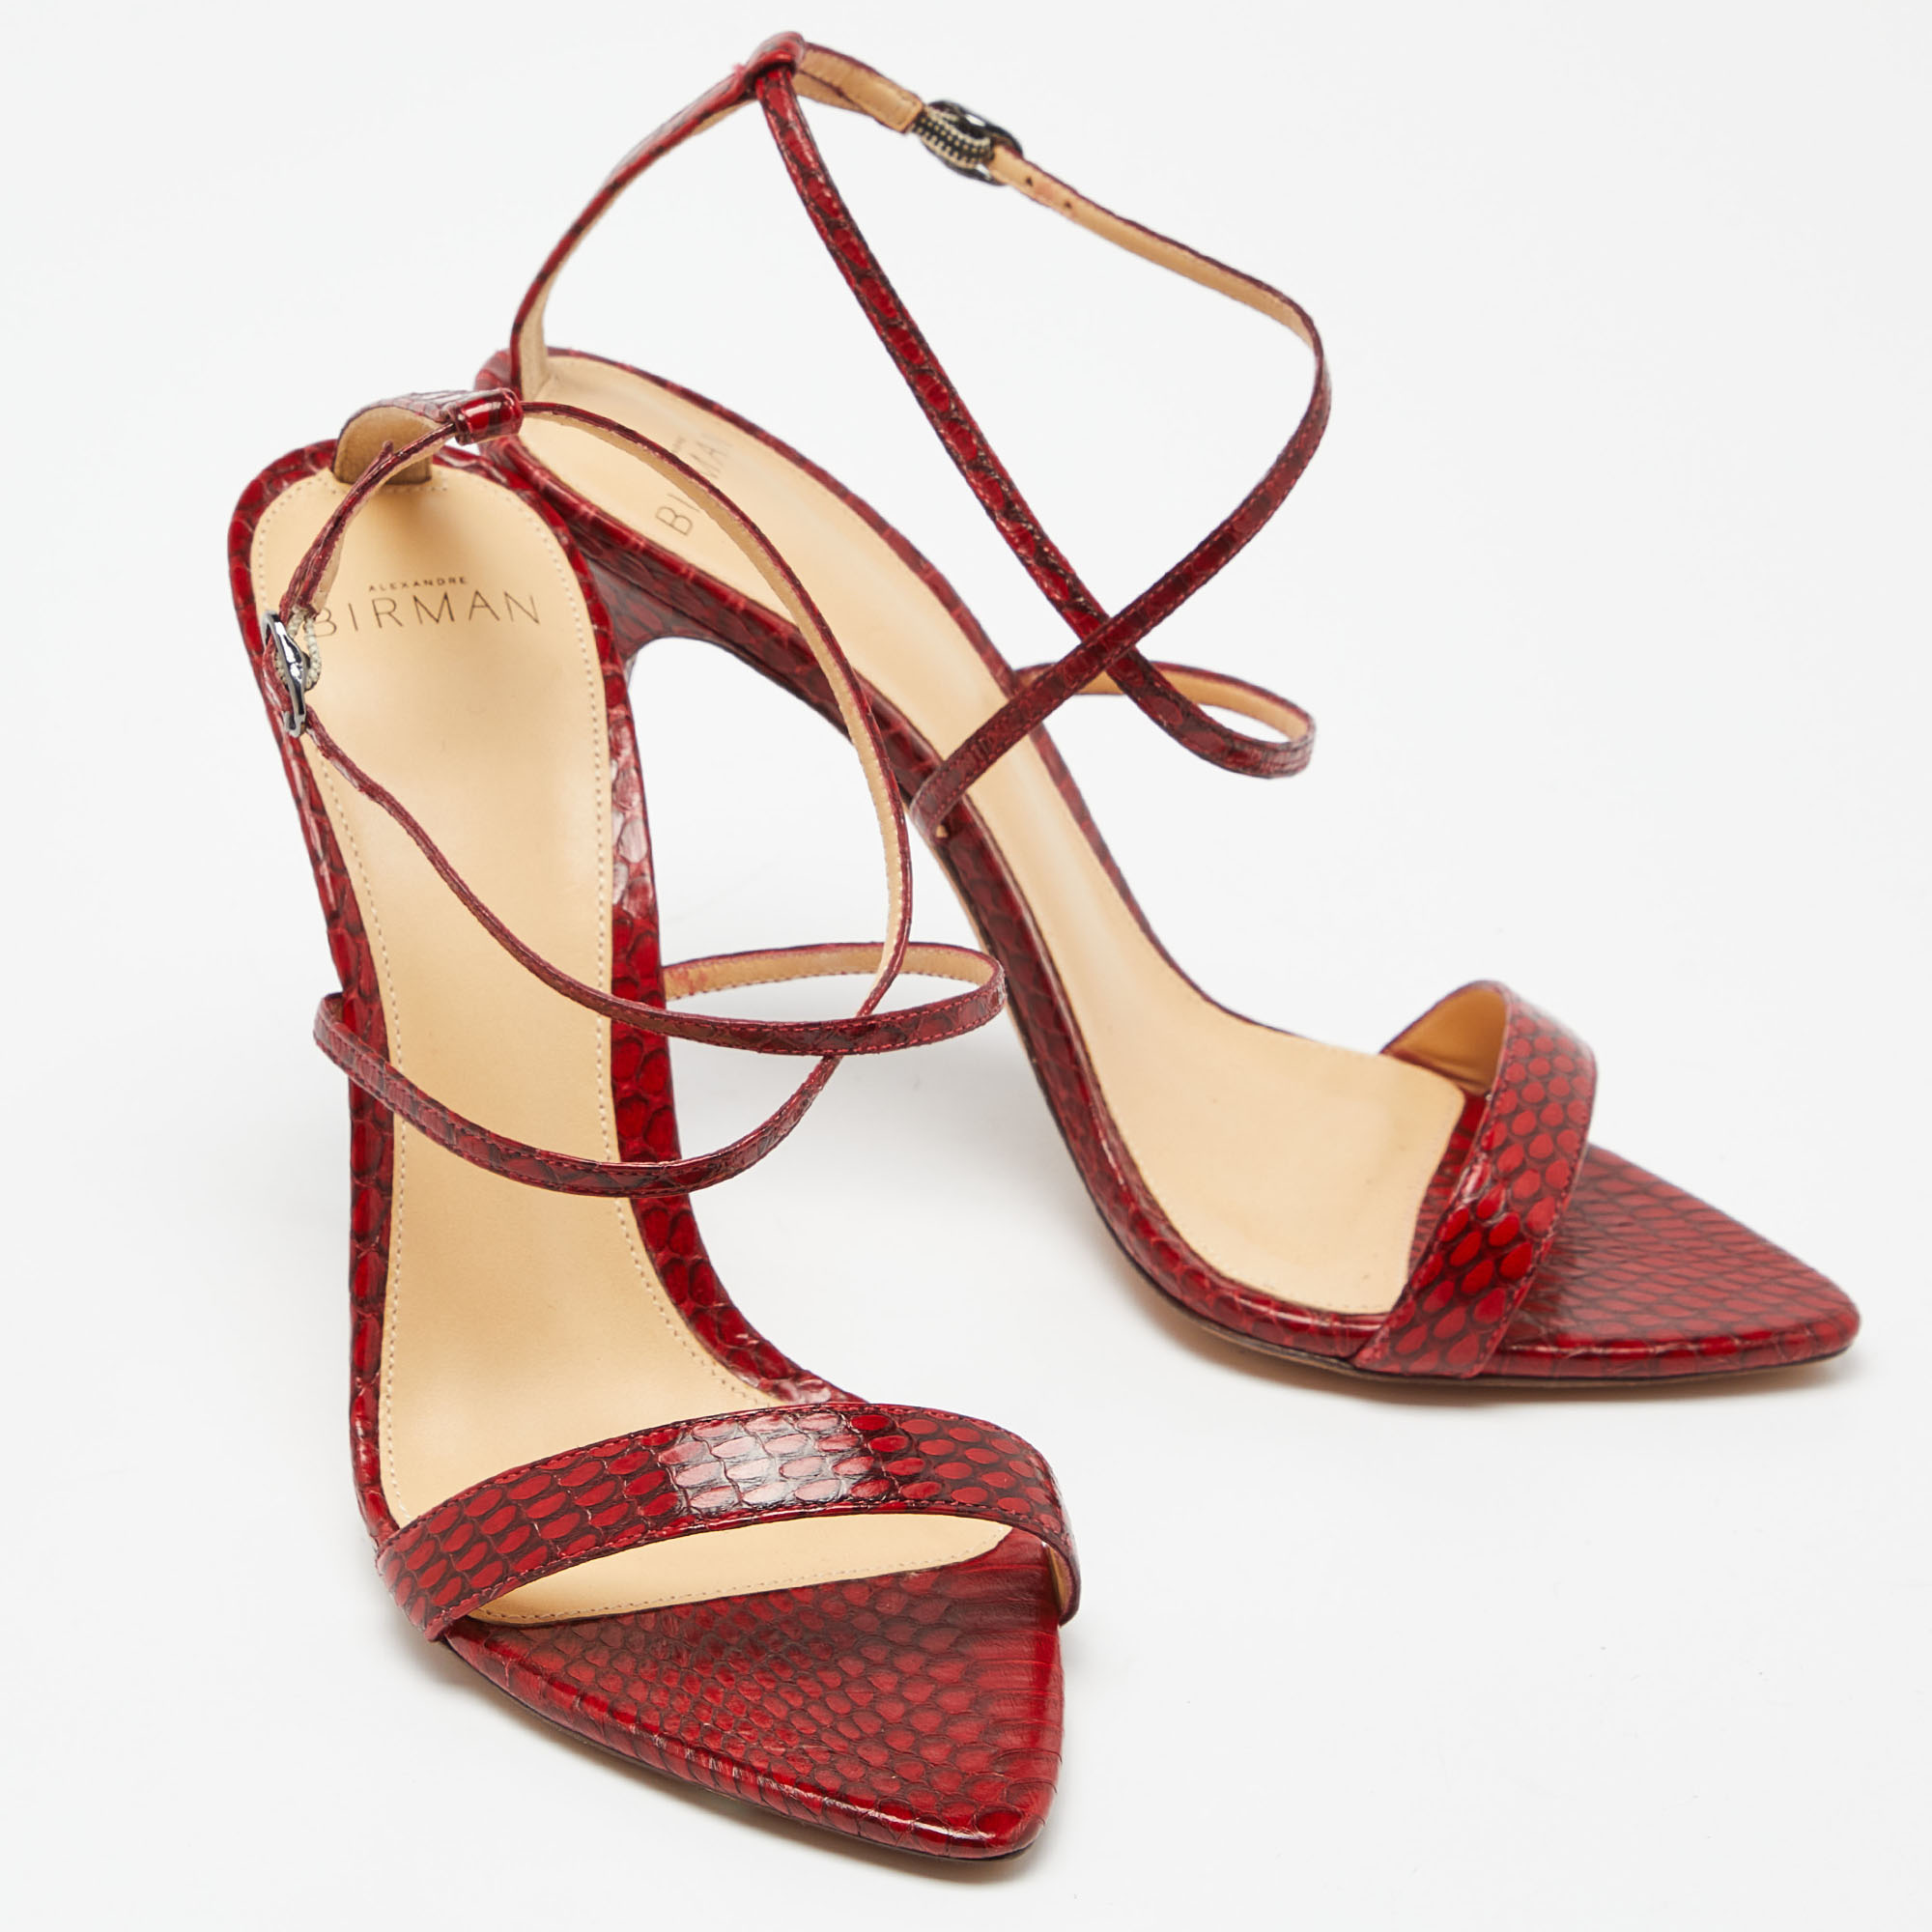 Alexandre Birman Red Python Leather Ankle Strap Sandals Size 39